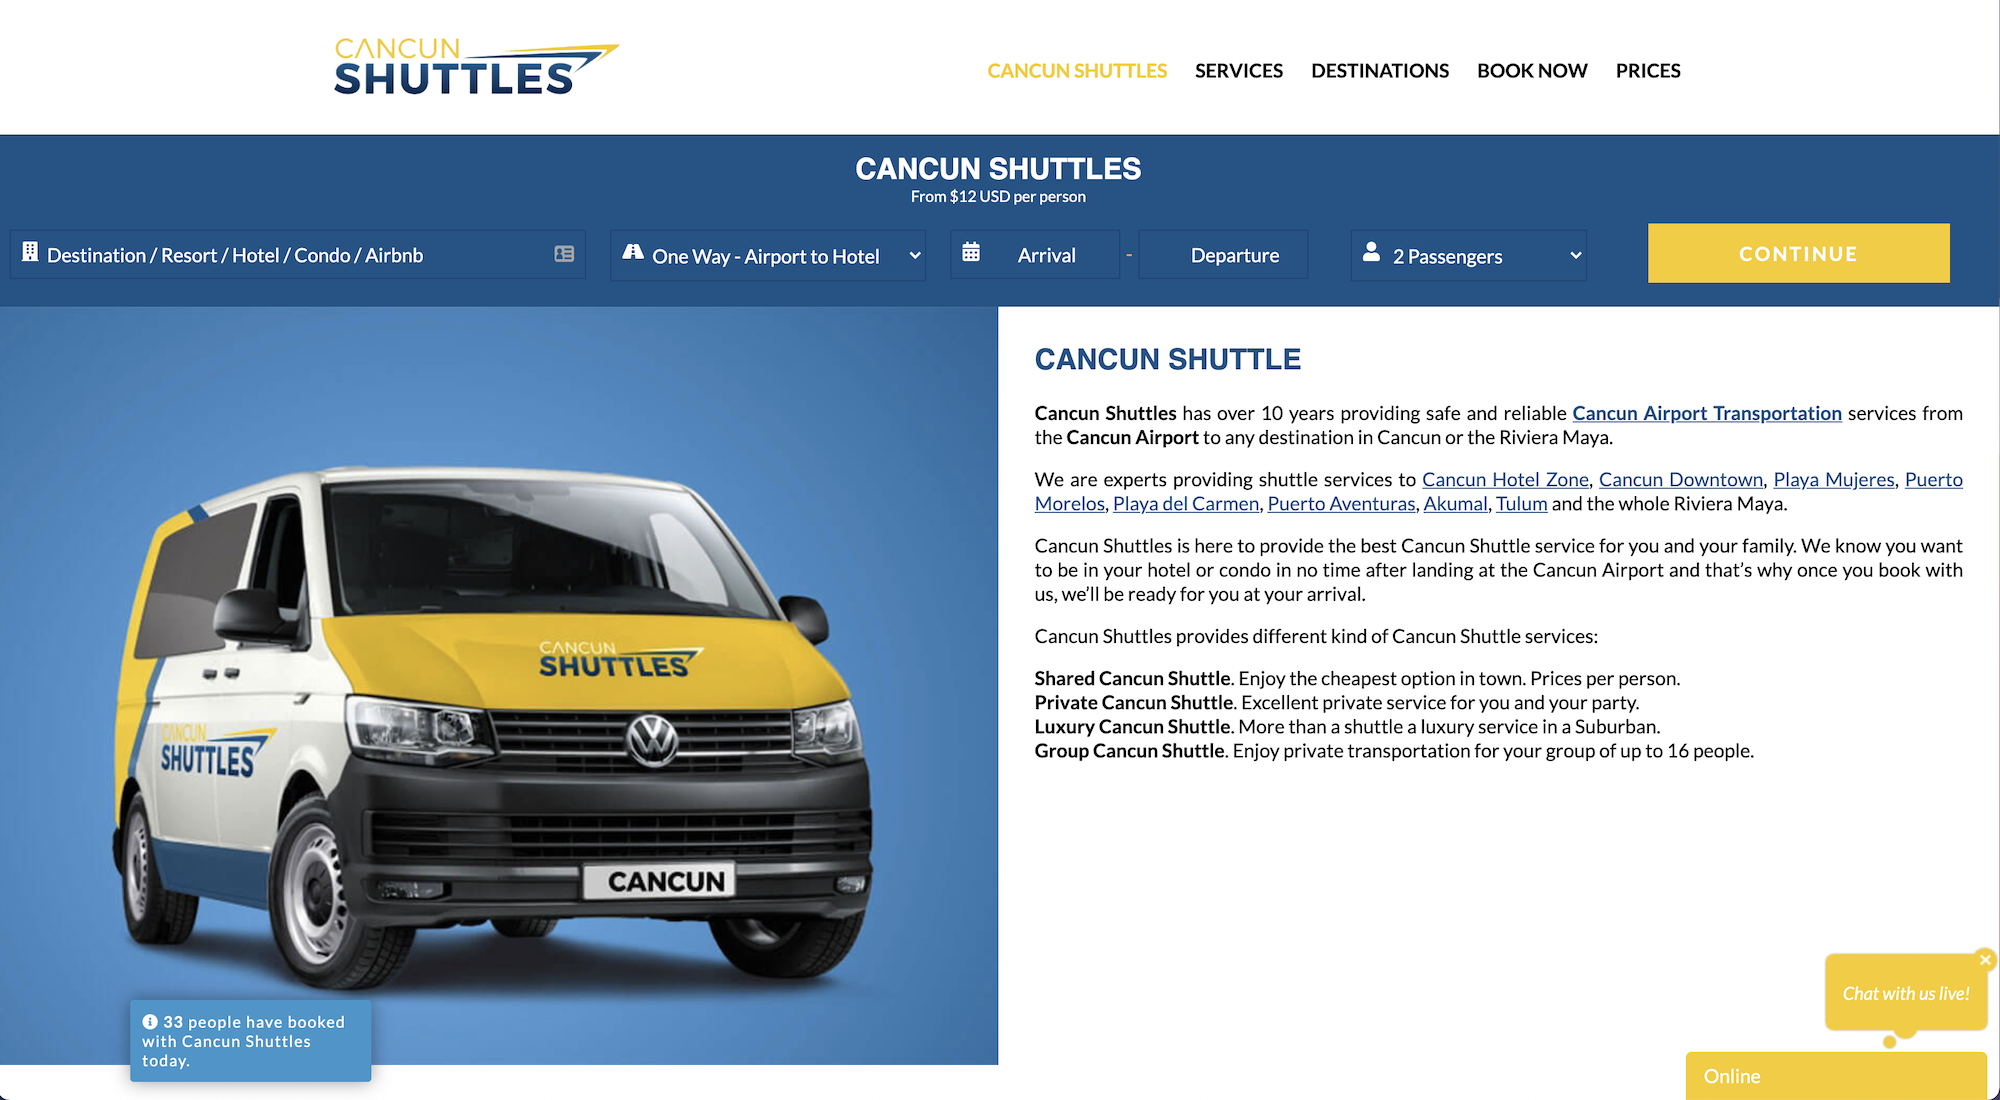 Cancun Shuttle - Shared Airport Transportation